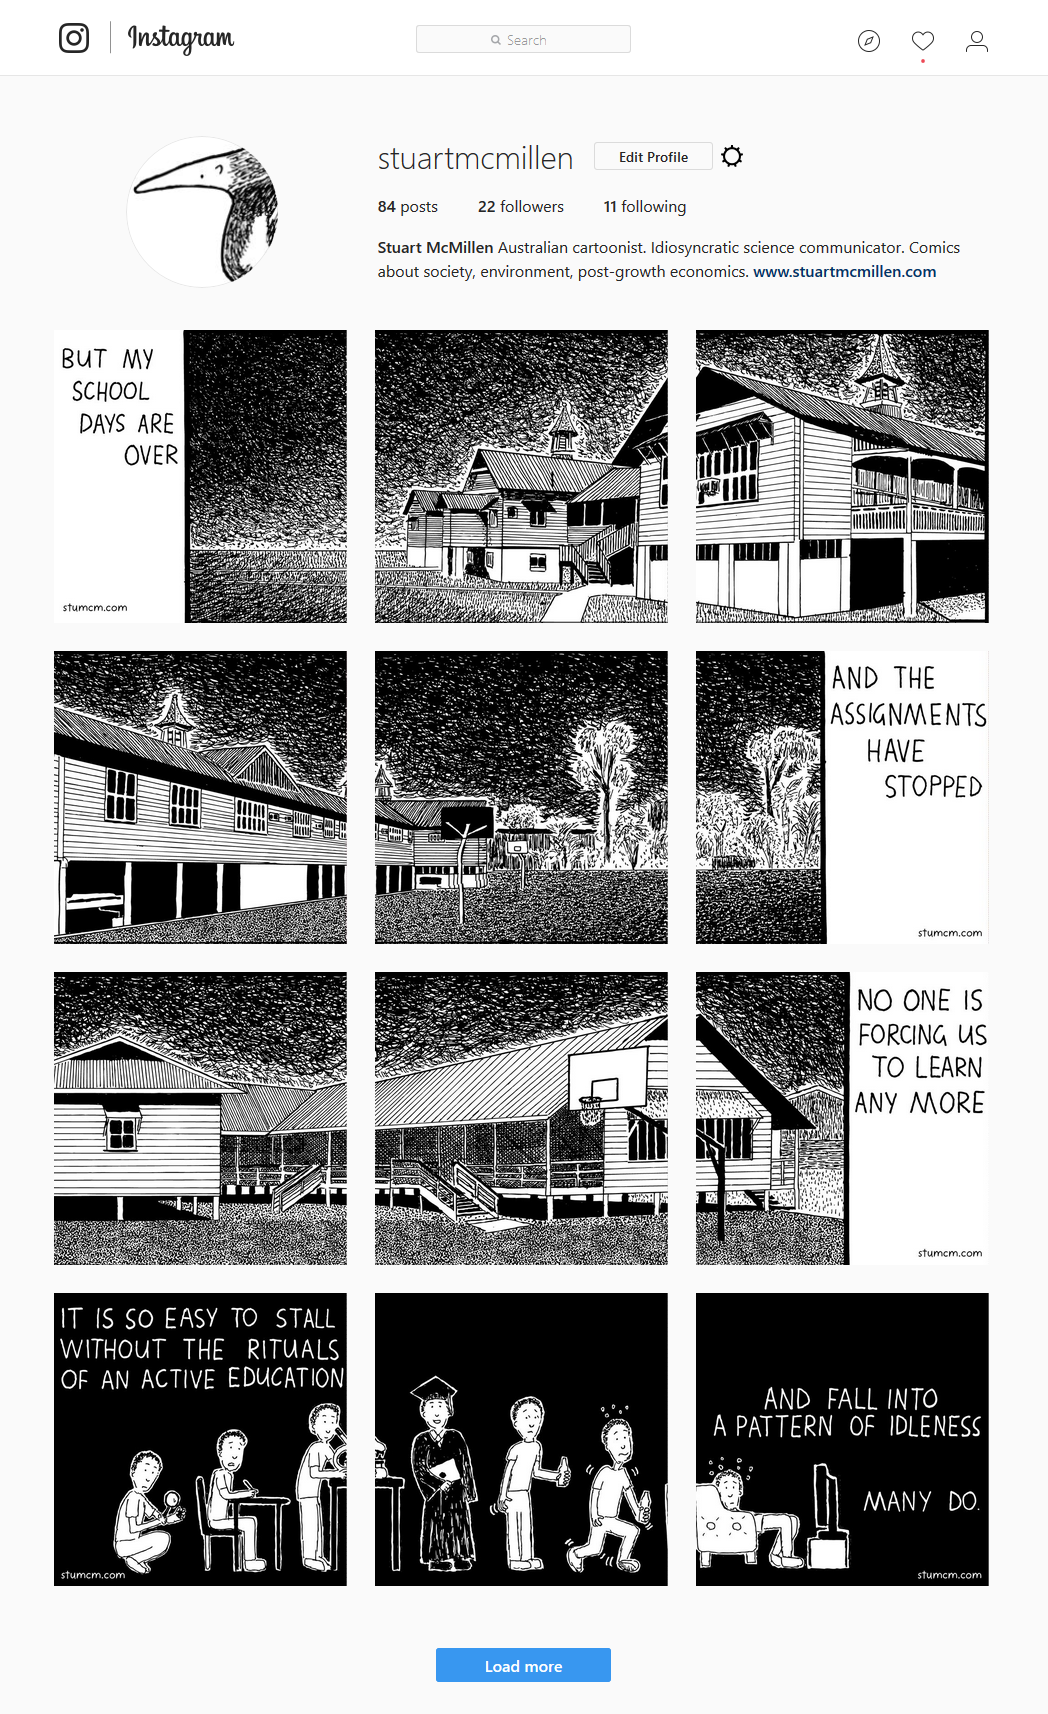 Comics in Instagram's grid format - Challenged by Stuart McMillen on Instagram 2